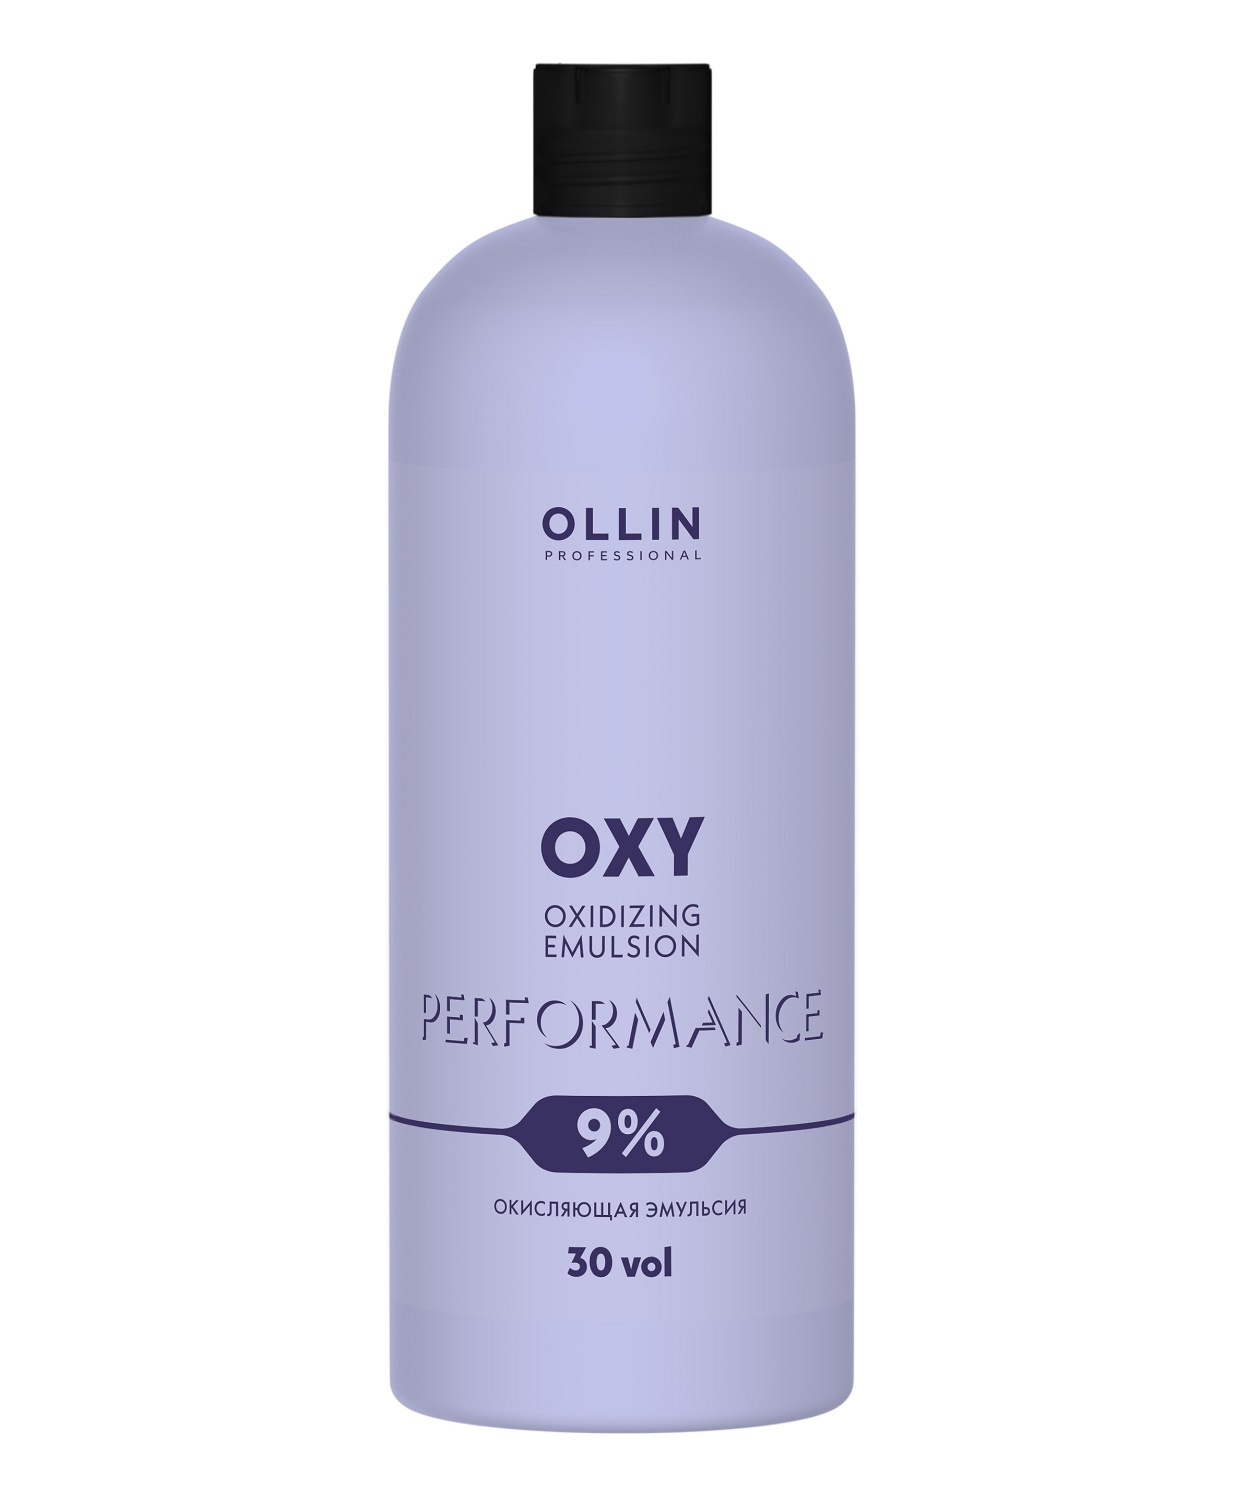 Ollin Professional Окисляющая эмульсия 9% 30 vol, 1000 мл (Ollin Professional, Performance)